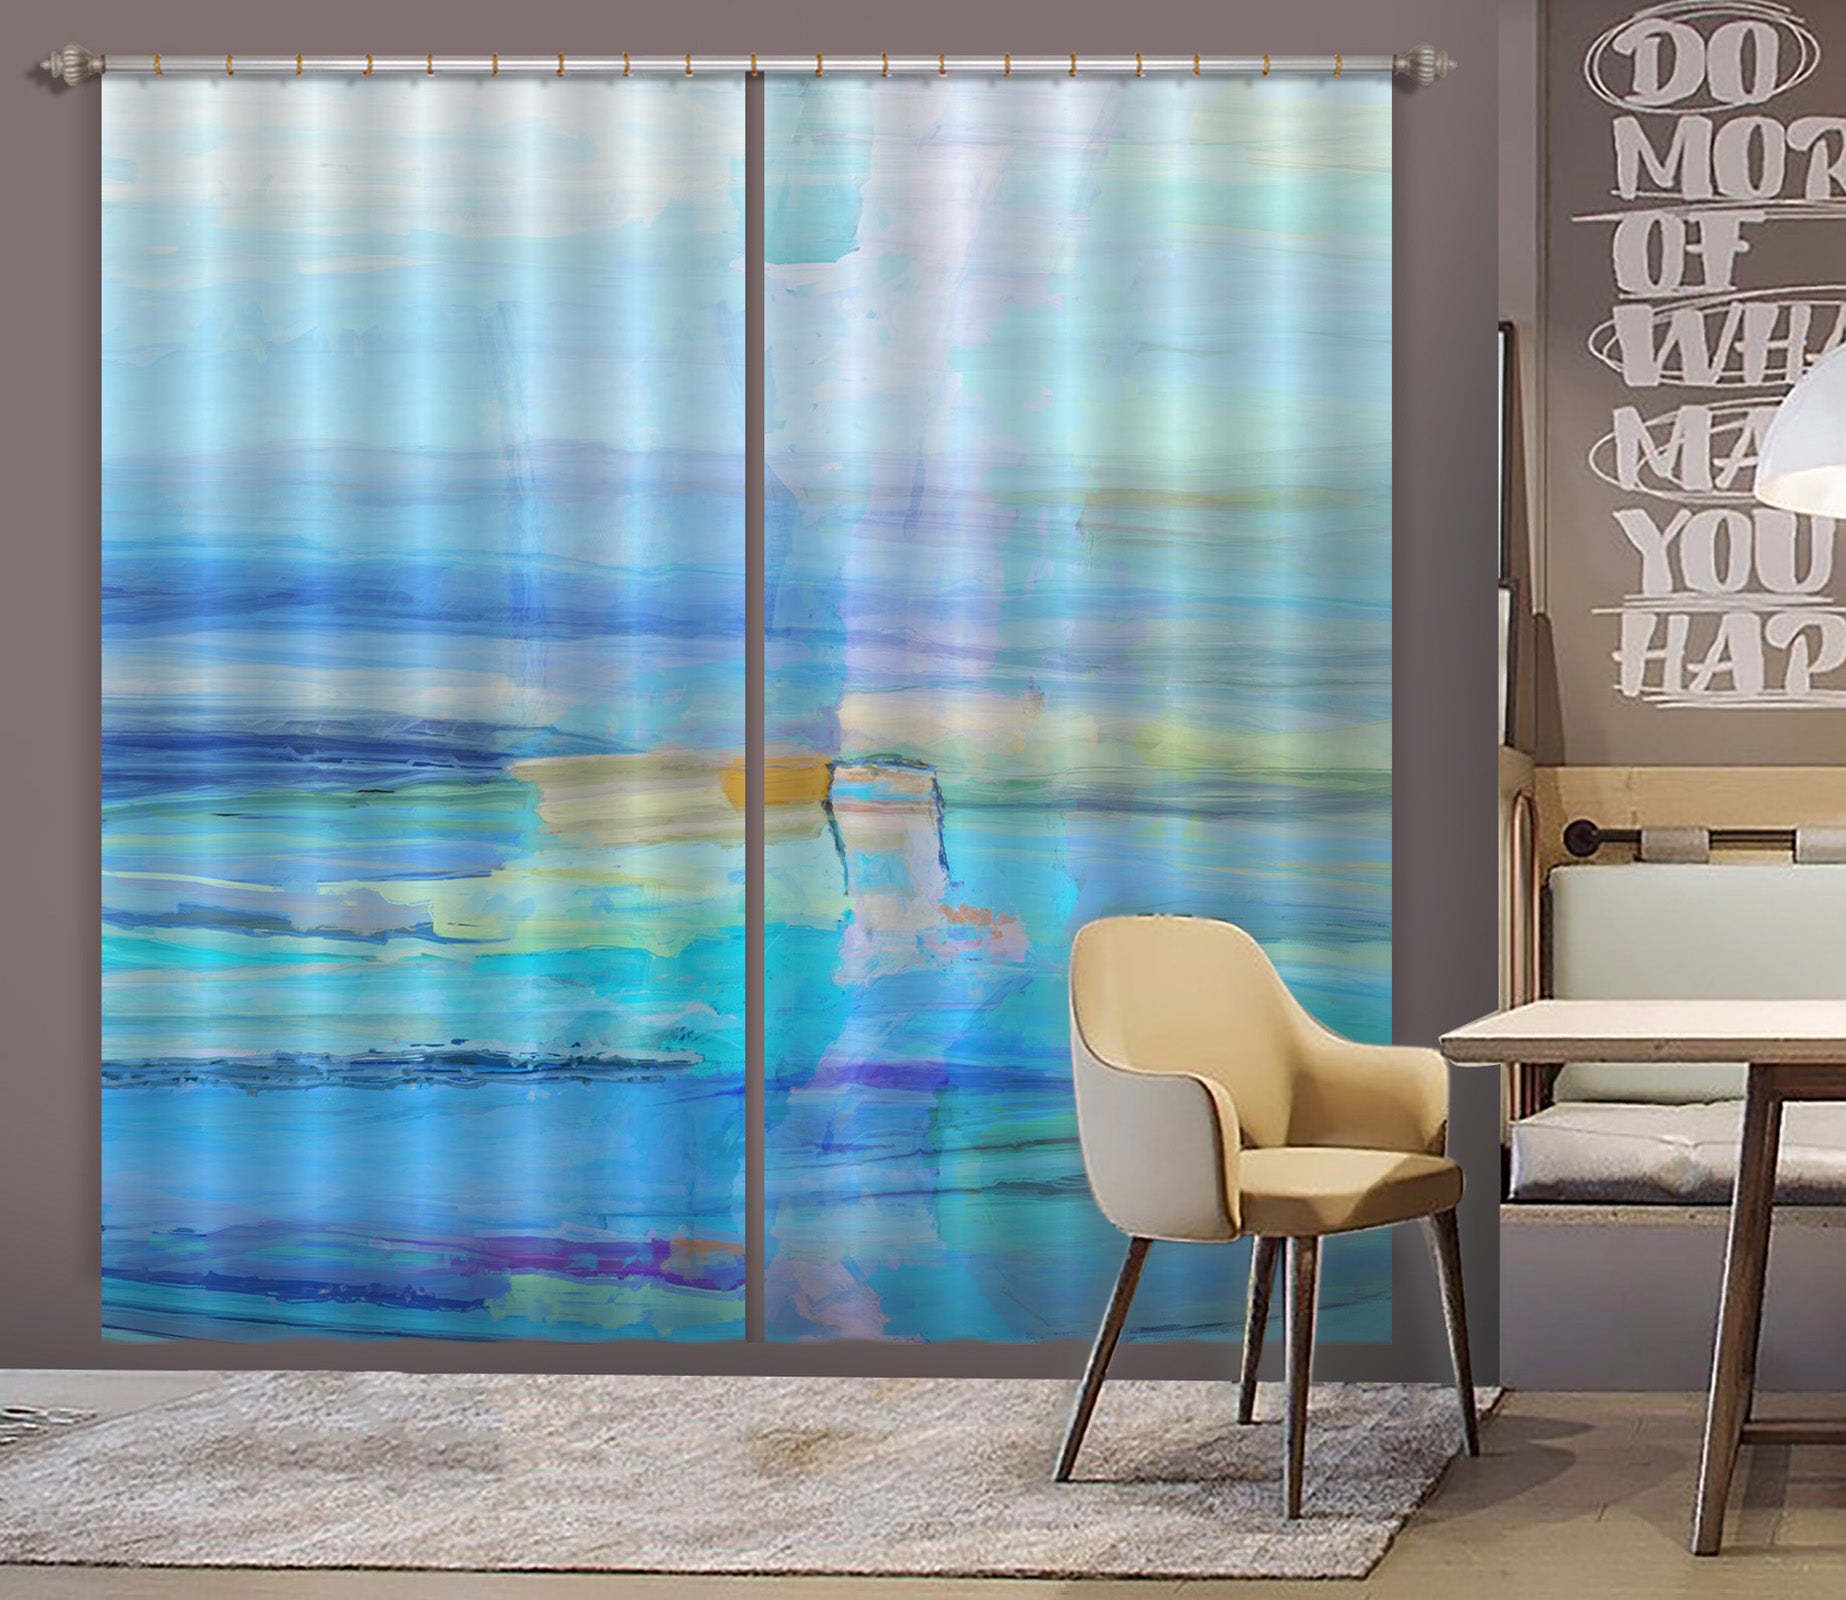 3D Blue Sea 045 Michael Tienhaara Curtain Curtains Drapes